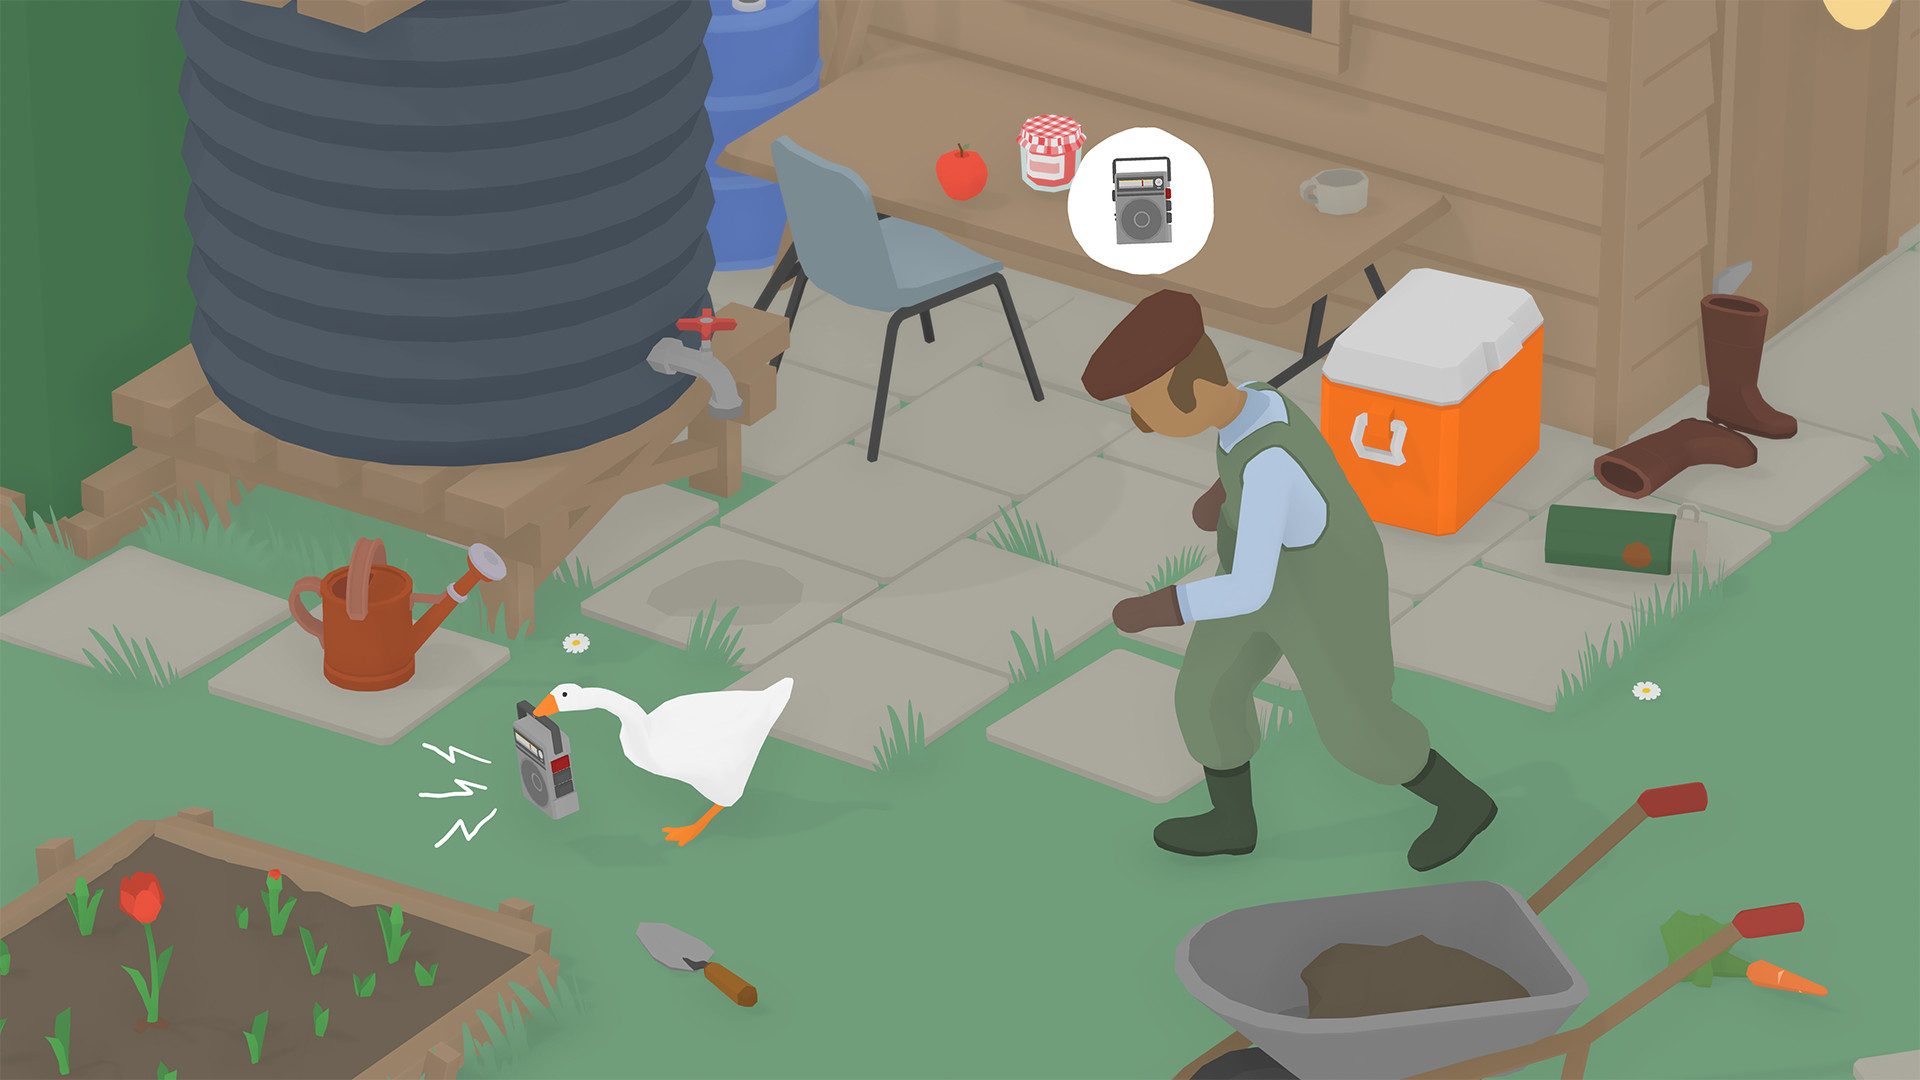 Untitled Goose Game - скриншот игры 1